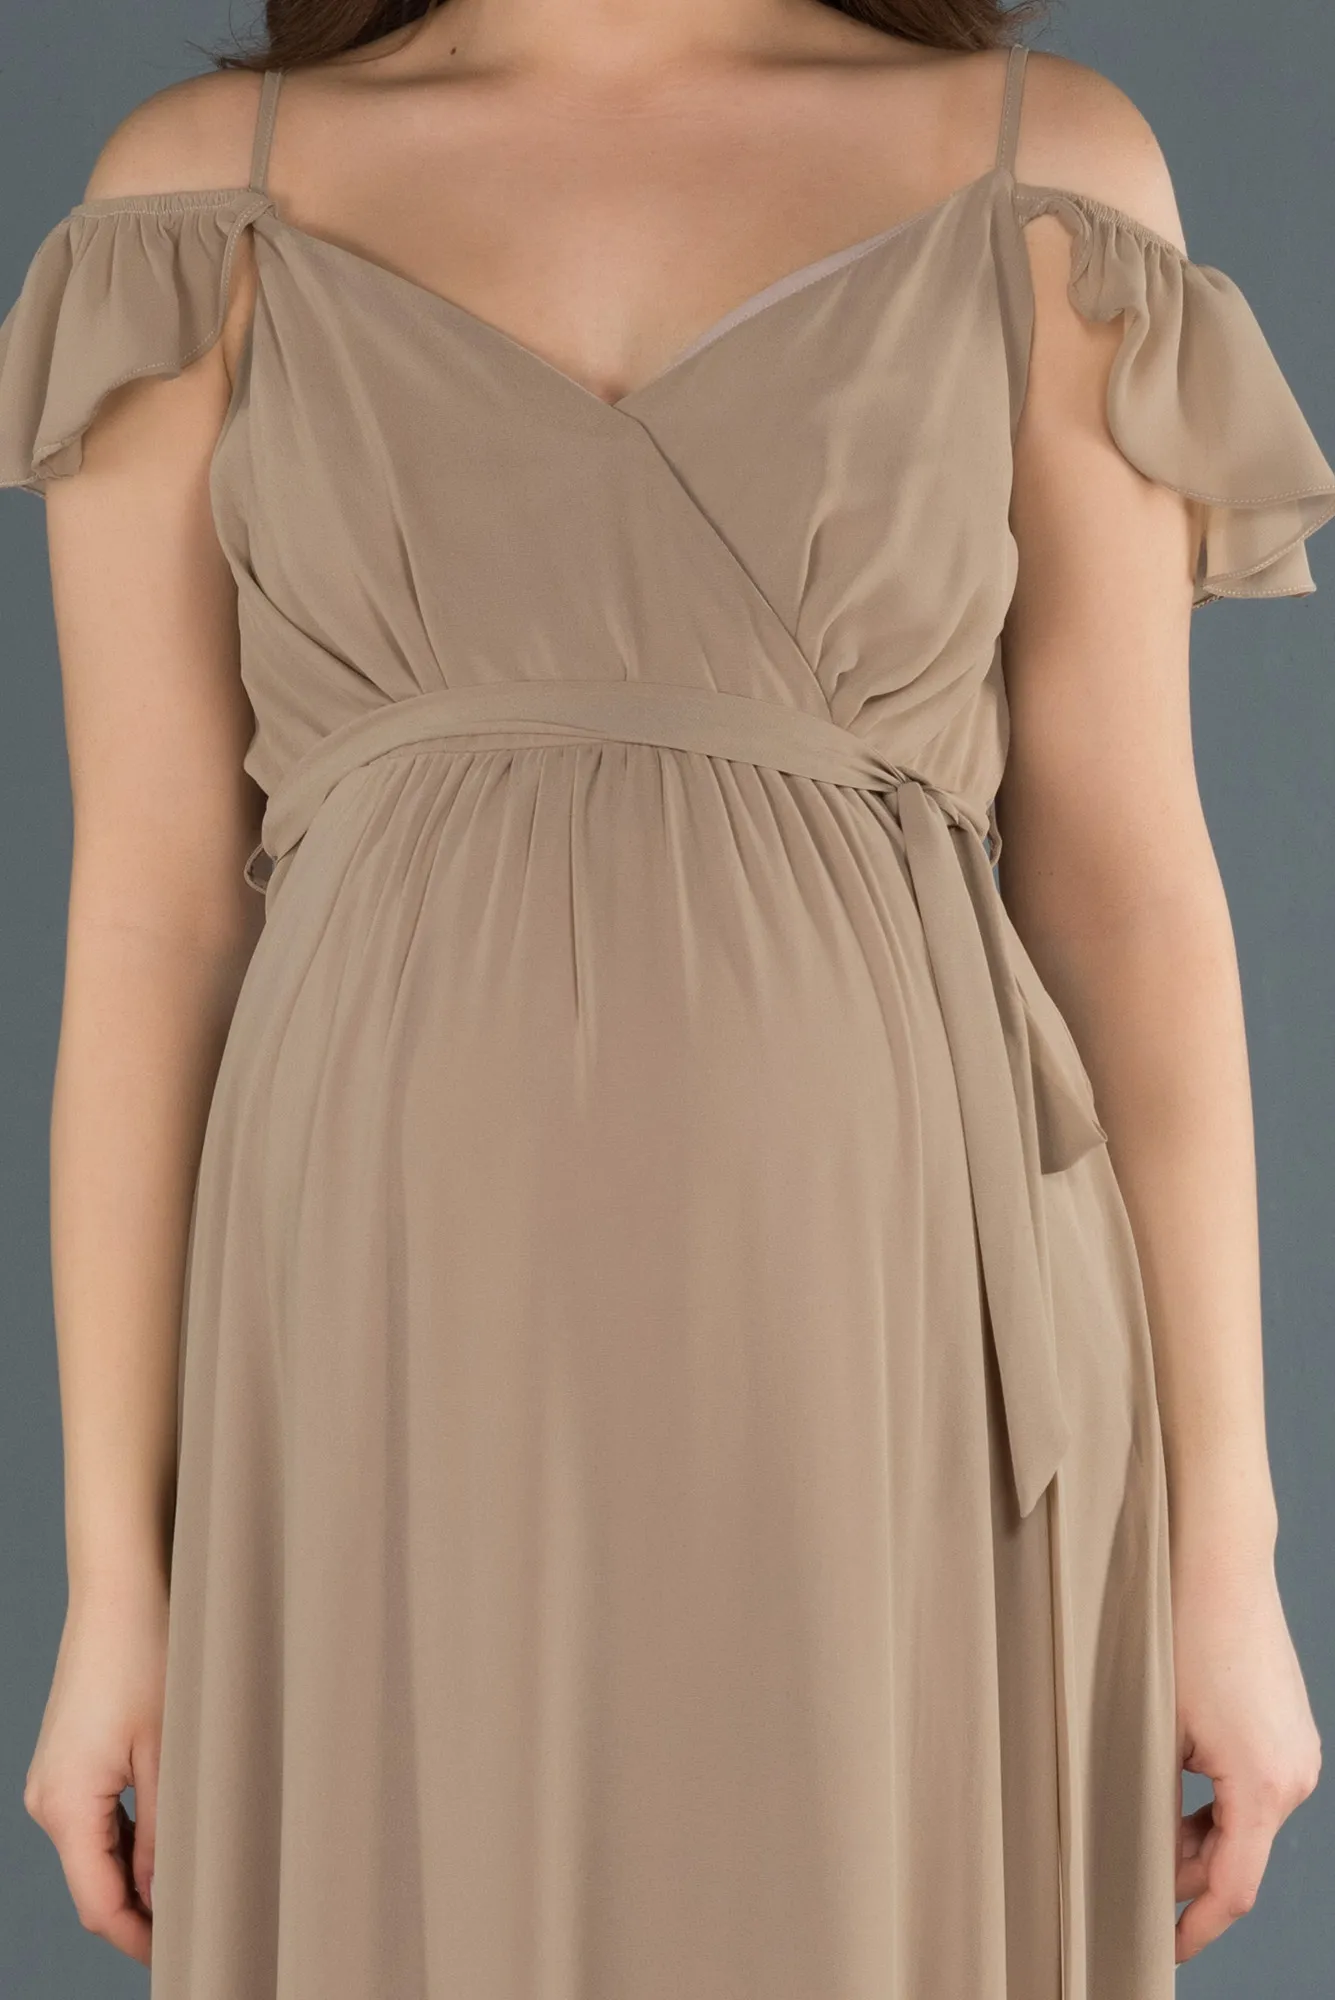 Mink-Long Pregnancy Evening Dress ABU756